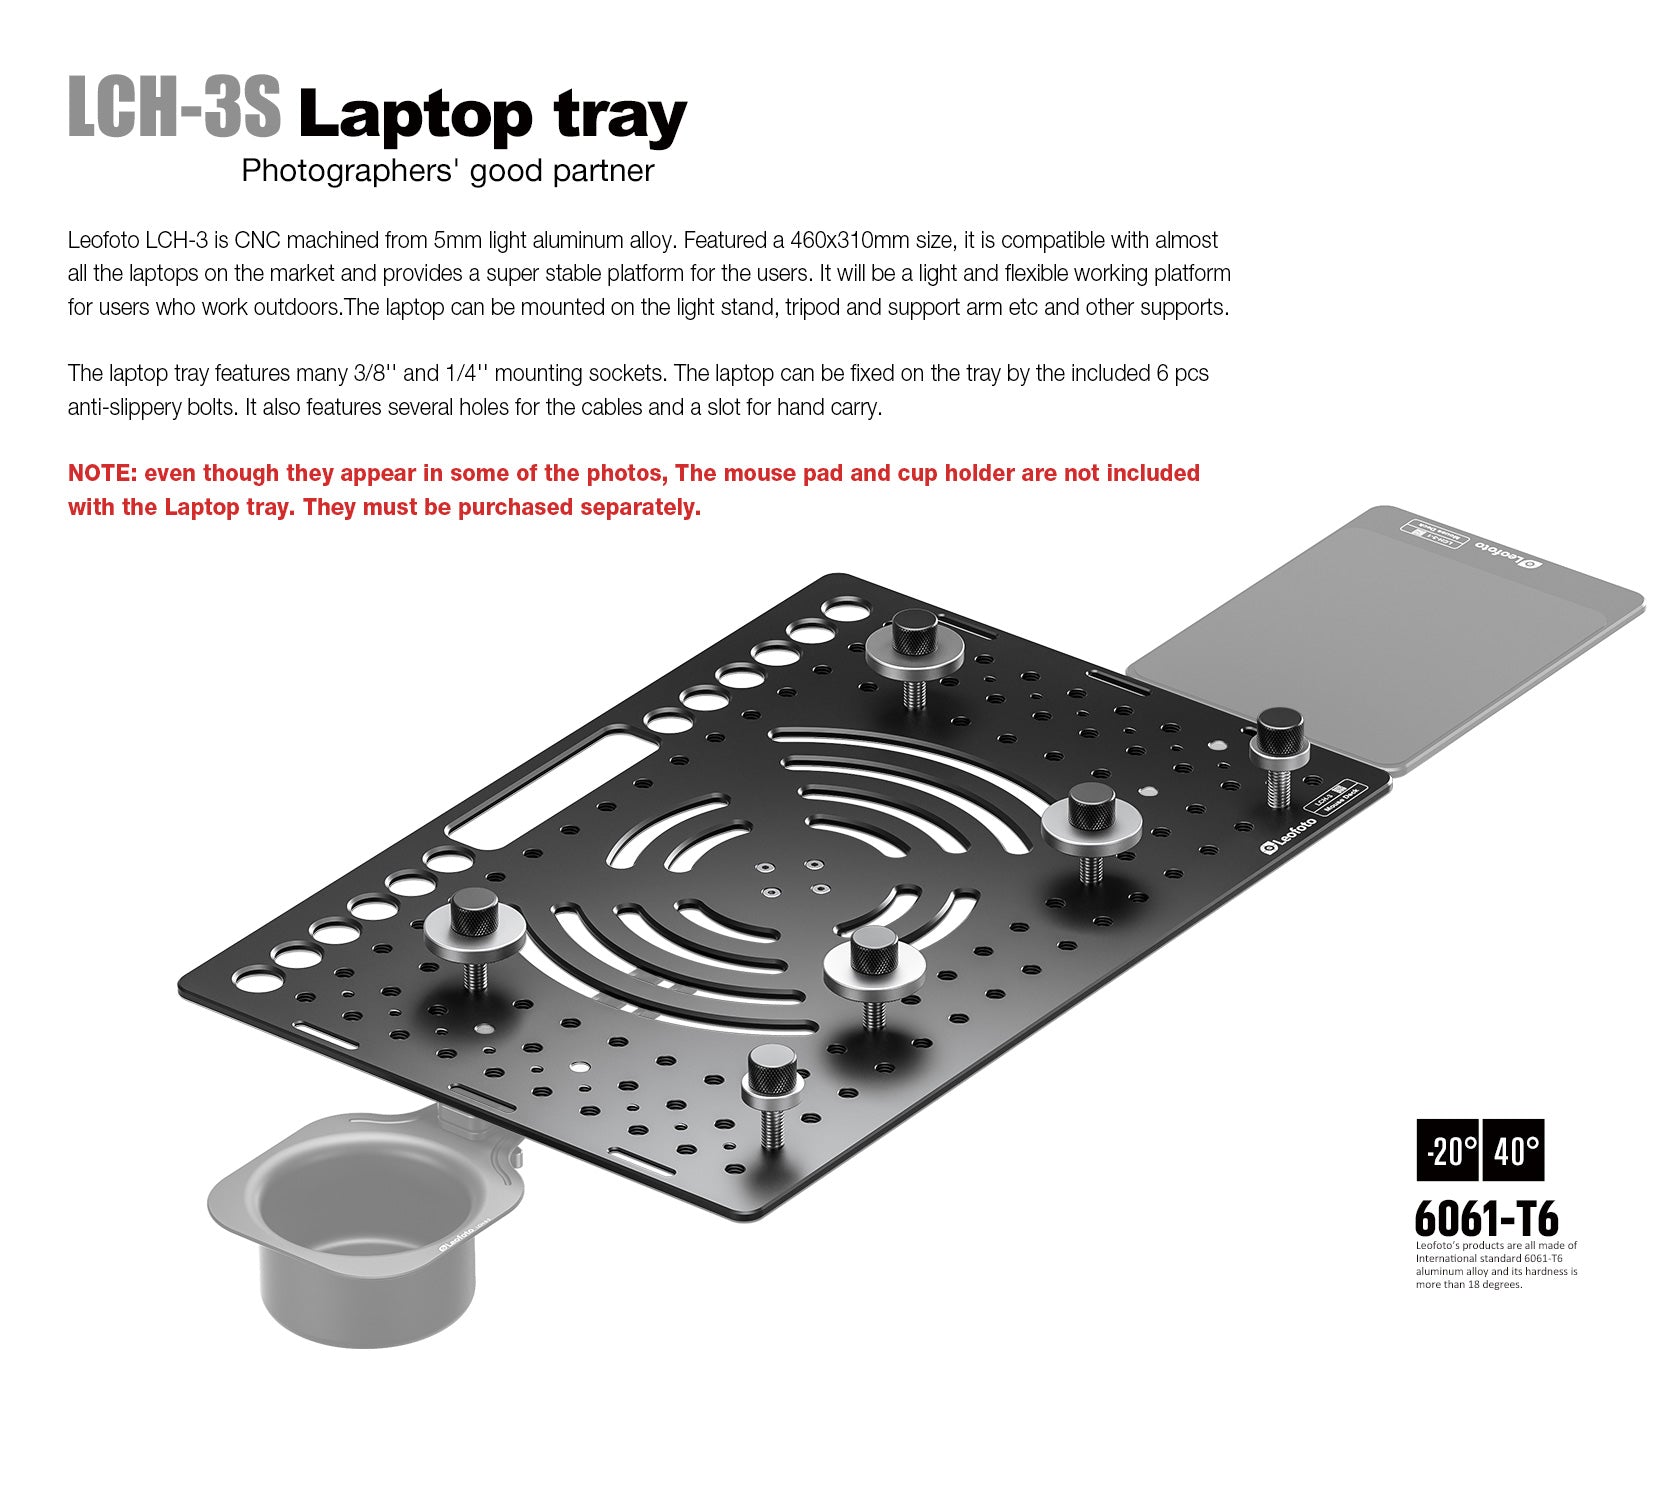 Leofoto LCH-3/LCH-3S Ultimate Laptop Tray (Tray Only) | 1/4